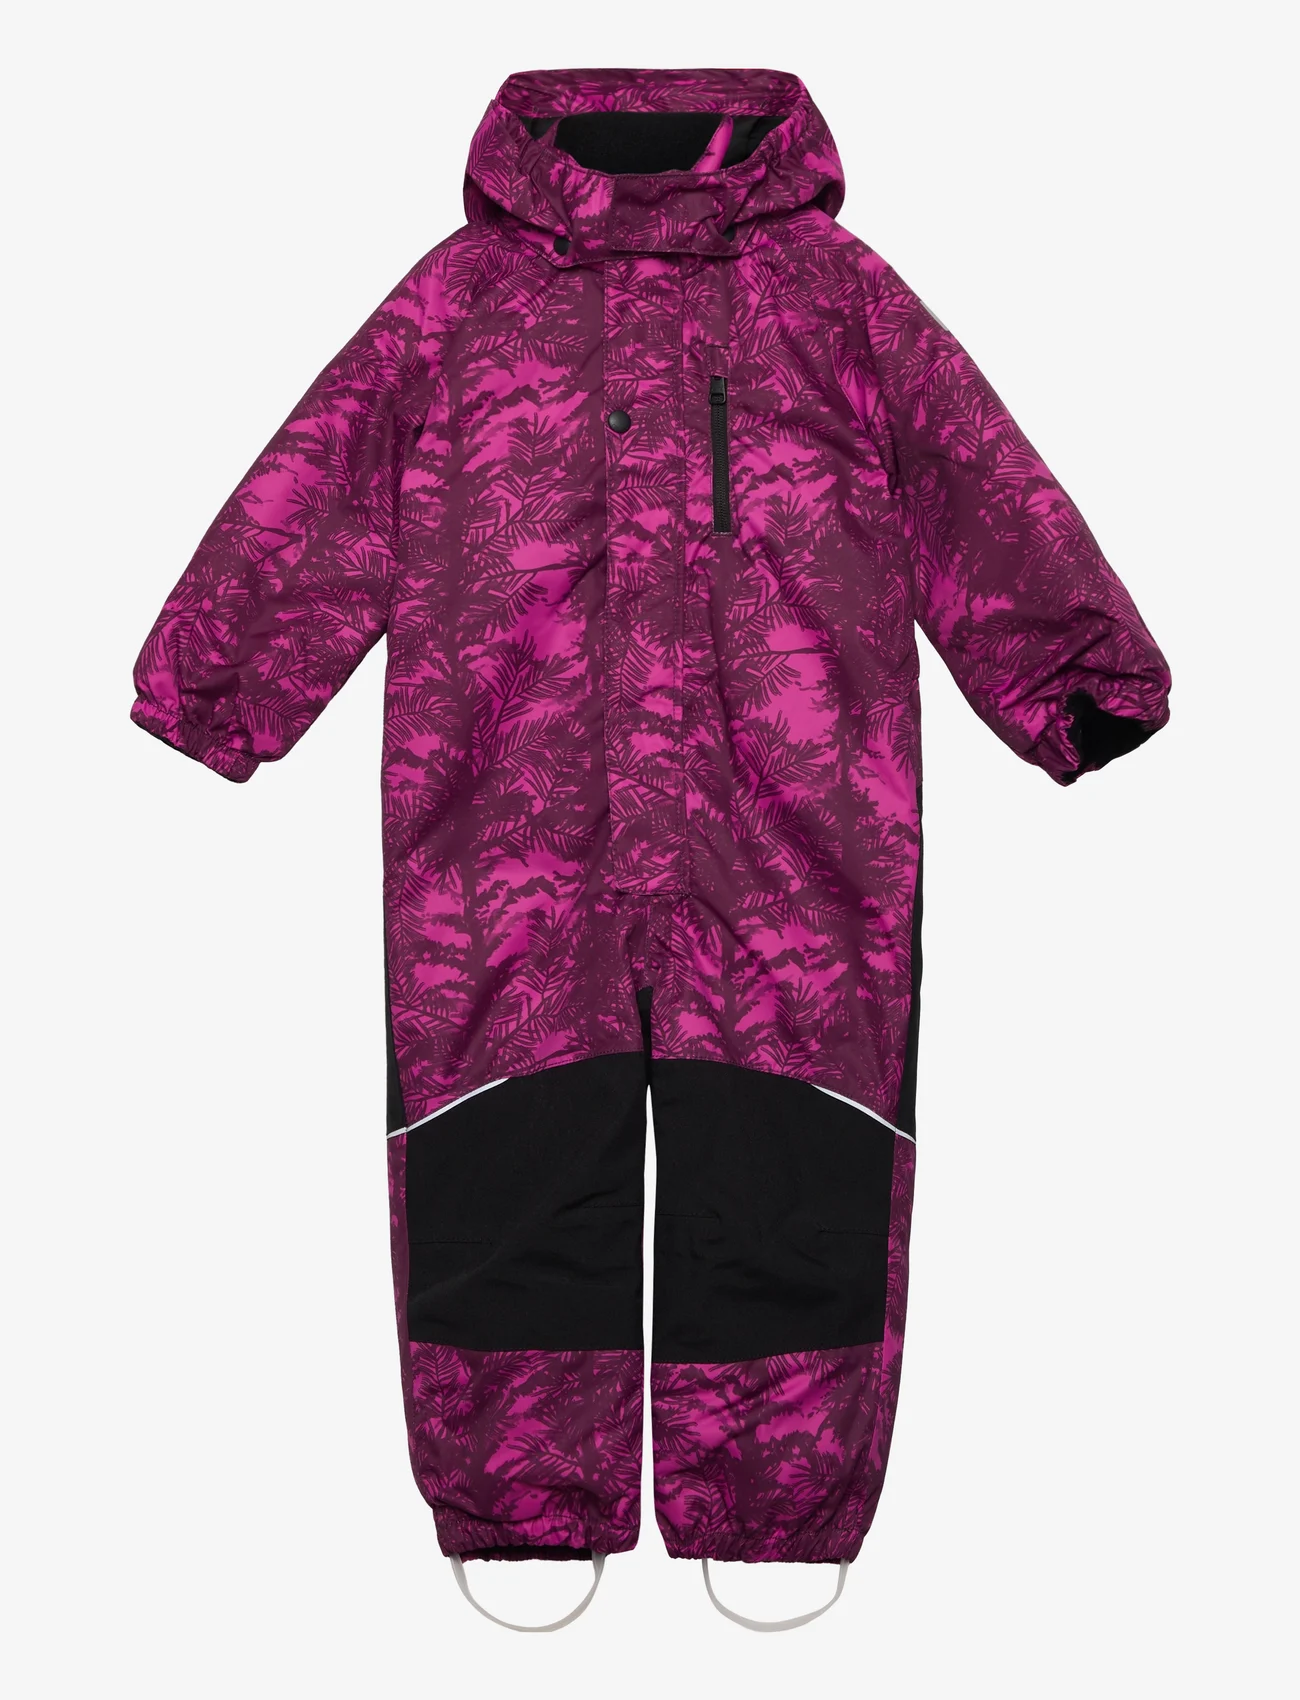 Reima - Winter overall, Pakuri - snowsuit - magenta purple - 0